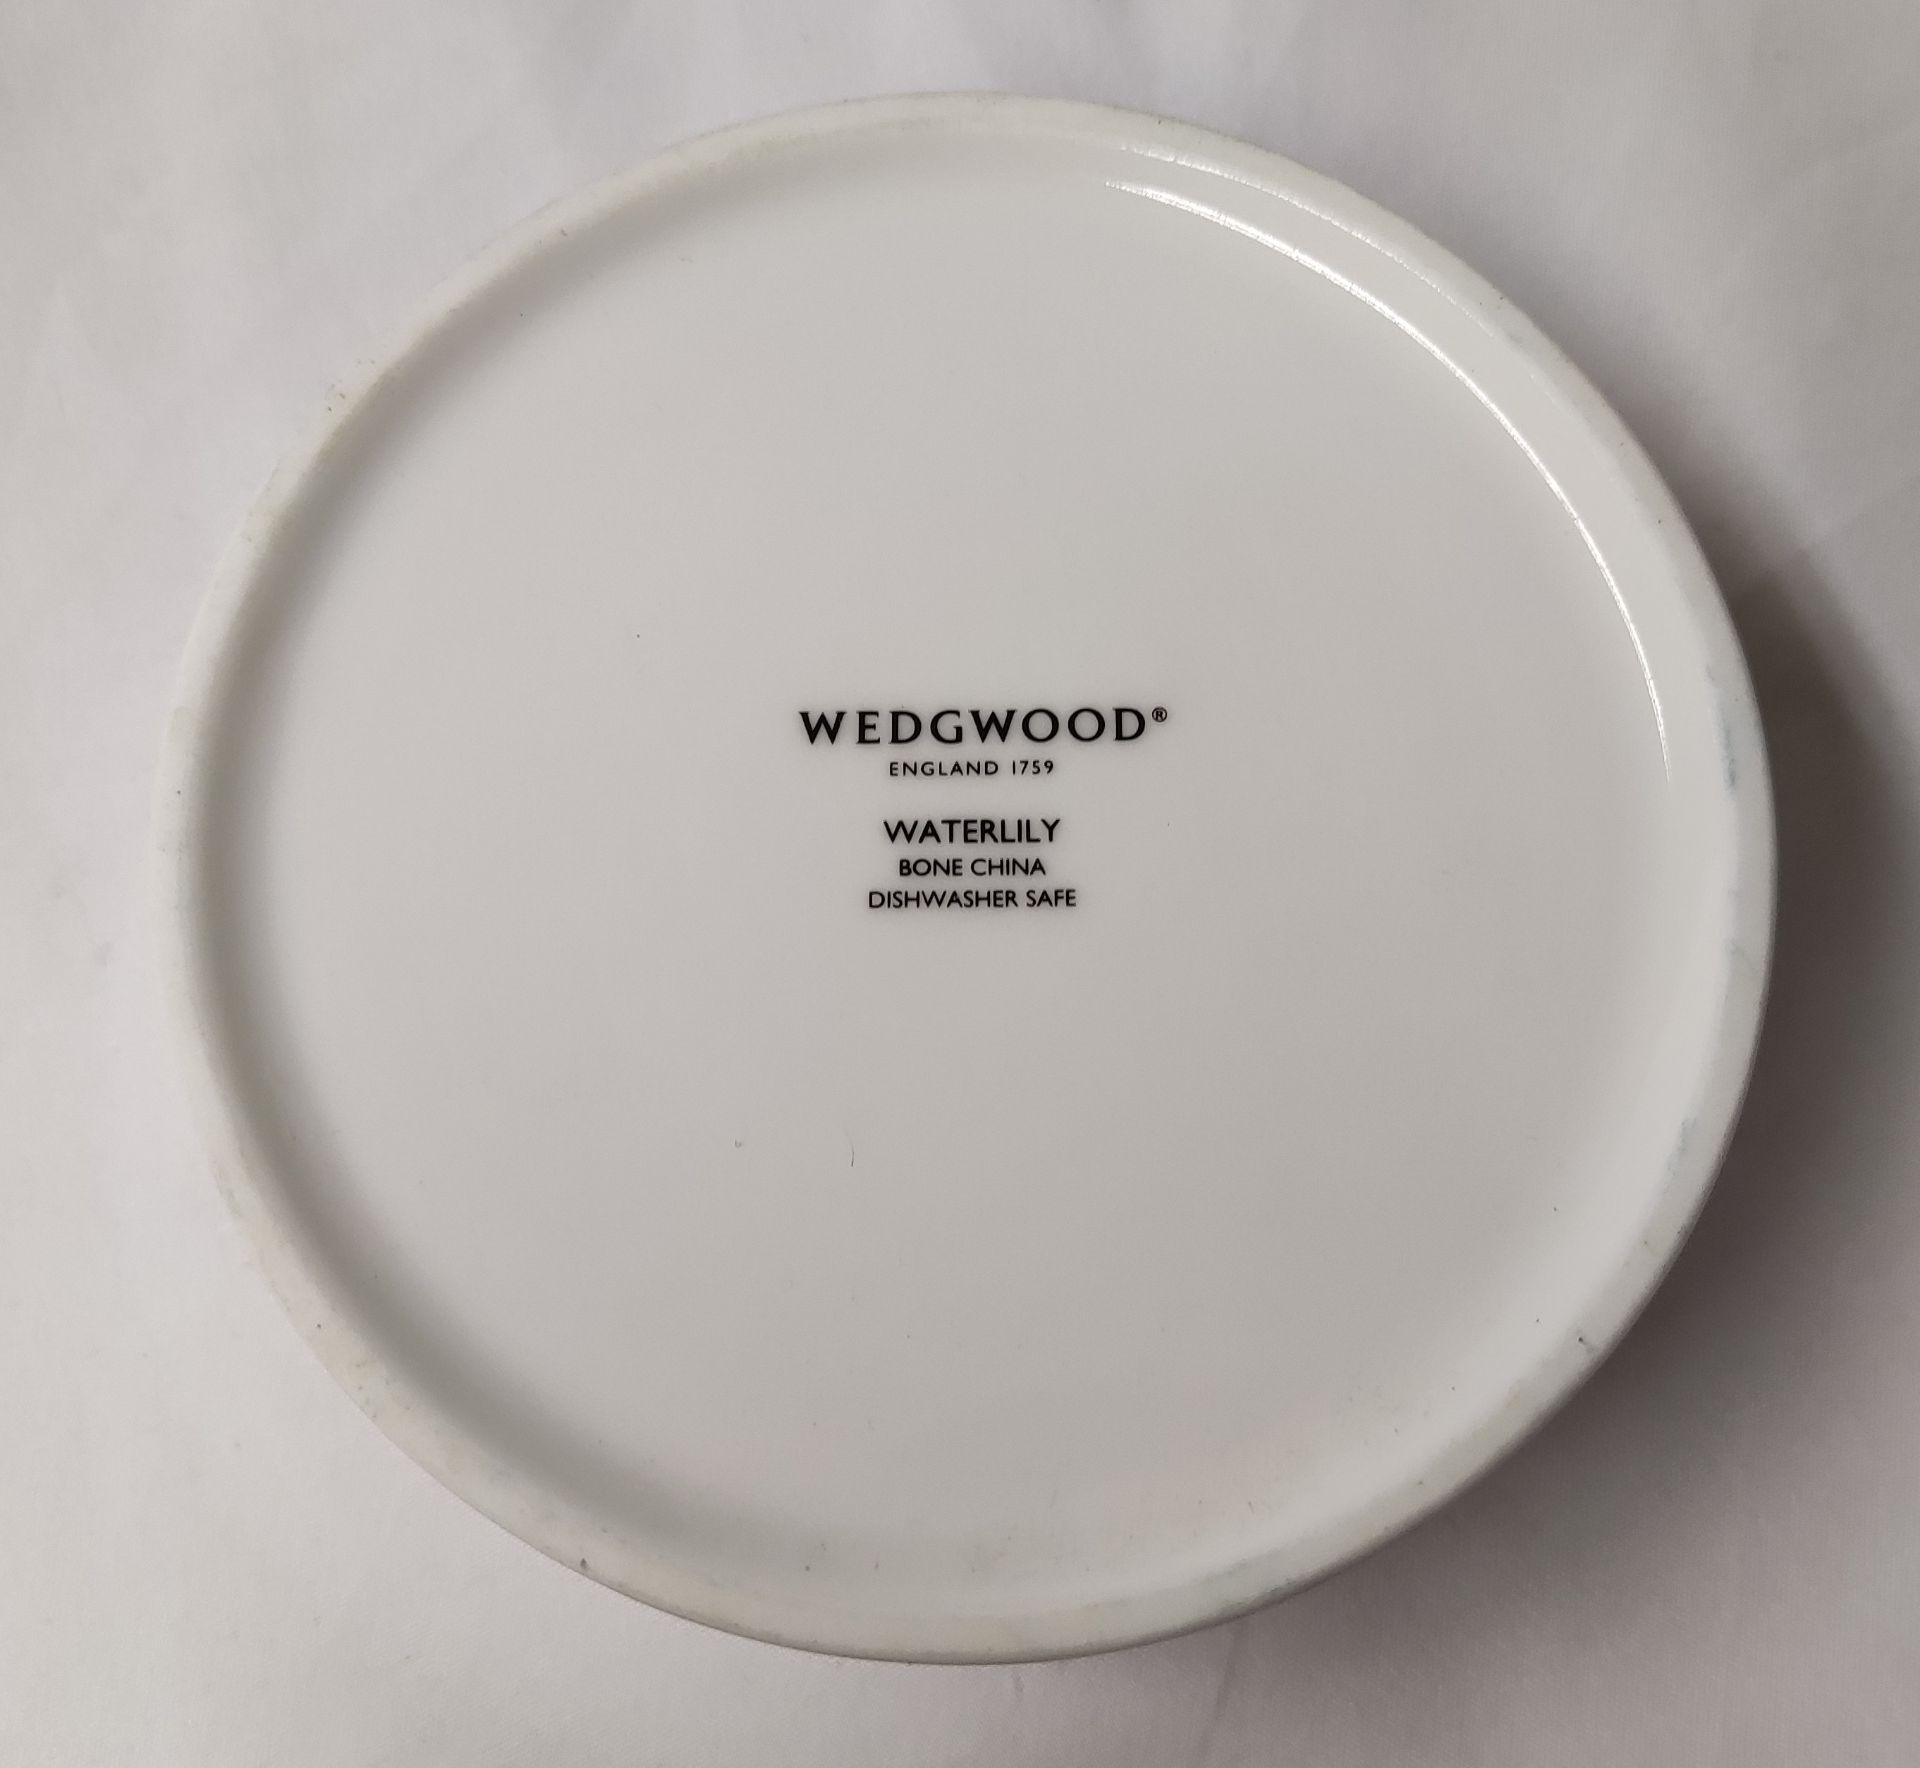 1 x WEDGWOOD Wonderlust Waterlily Fine Bone China Sugar & Creamer Set - New/Boxed - RRP £80 - - Image 7 of 22